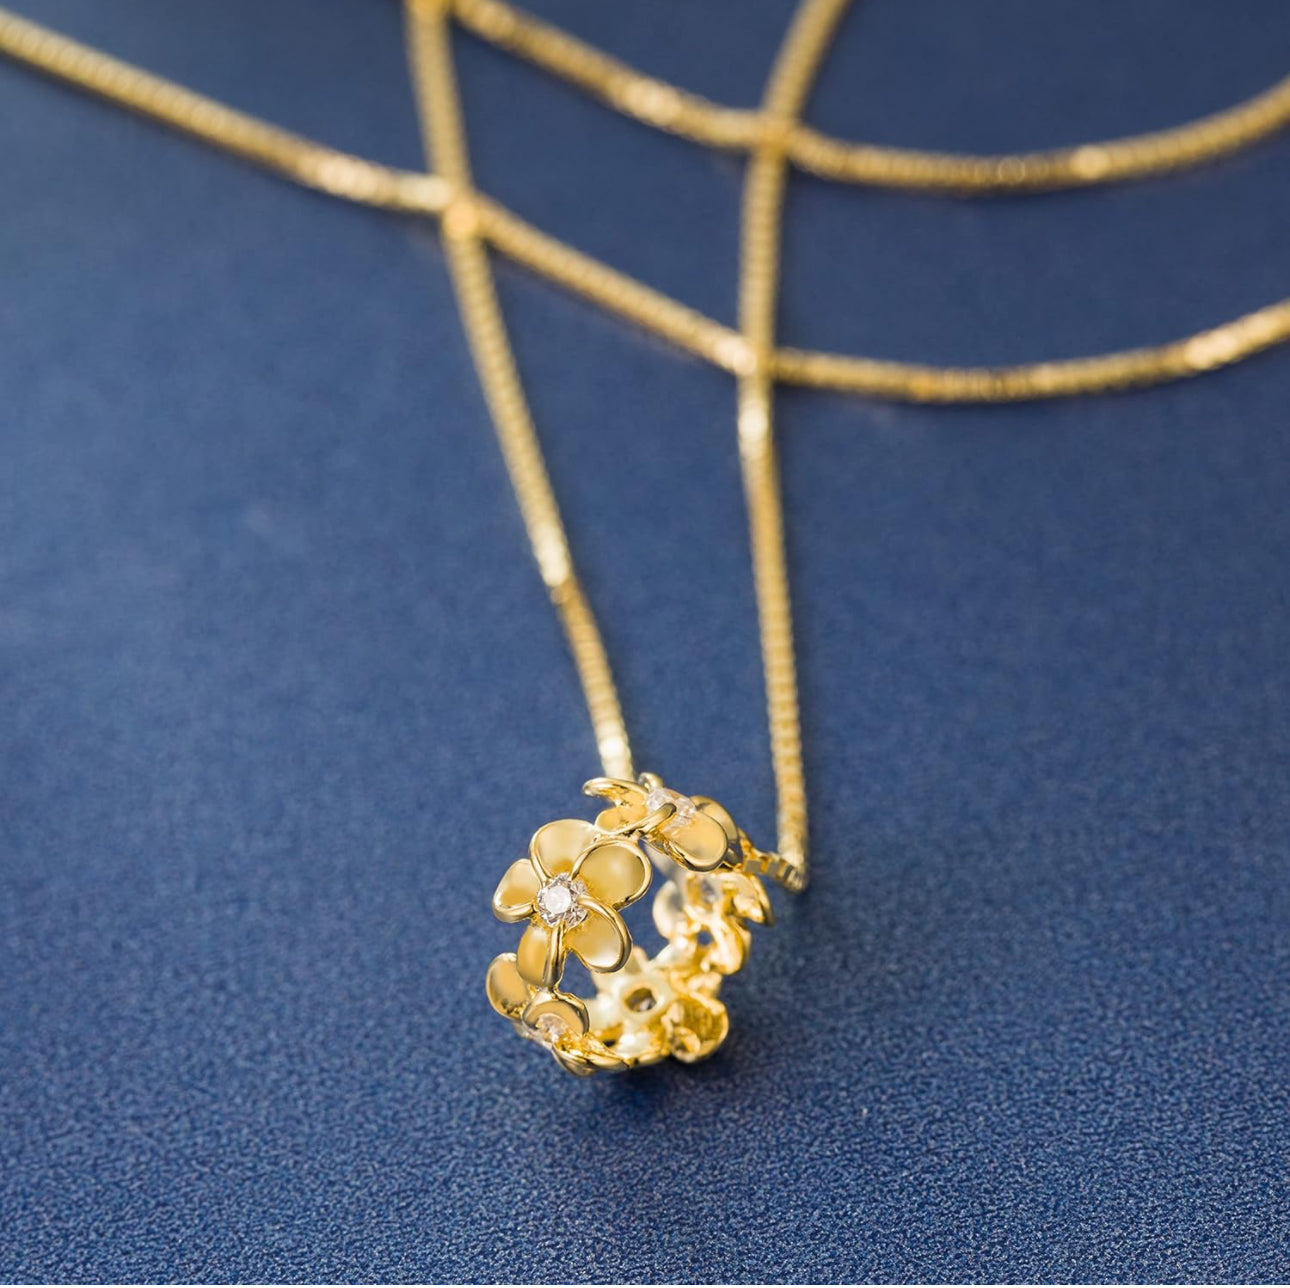 Kapalili Hawaiian Jewelry - Gold Plumeria